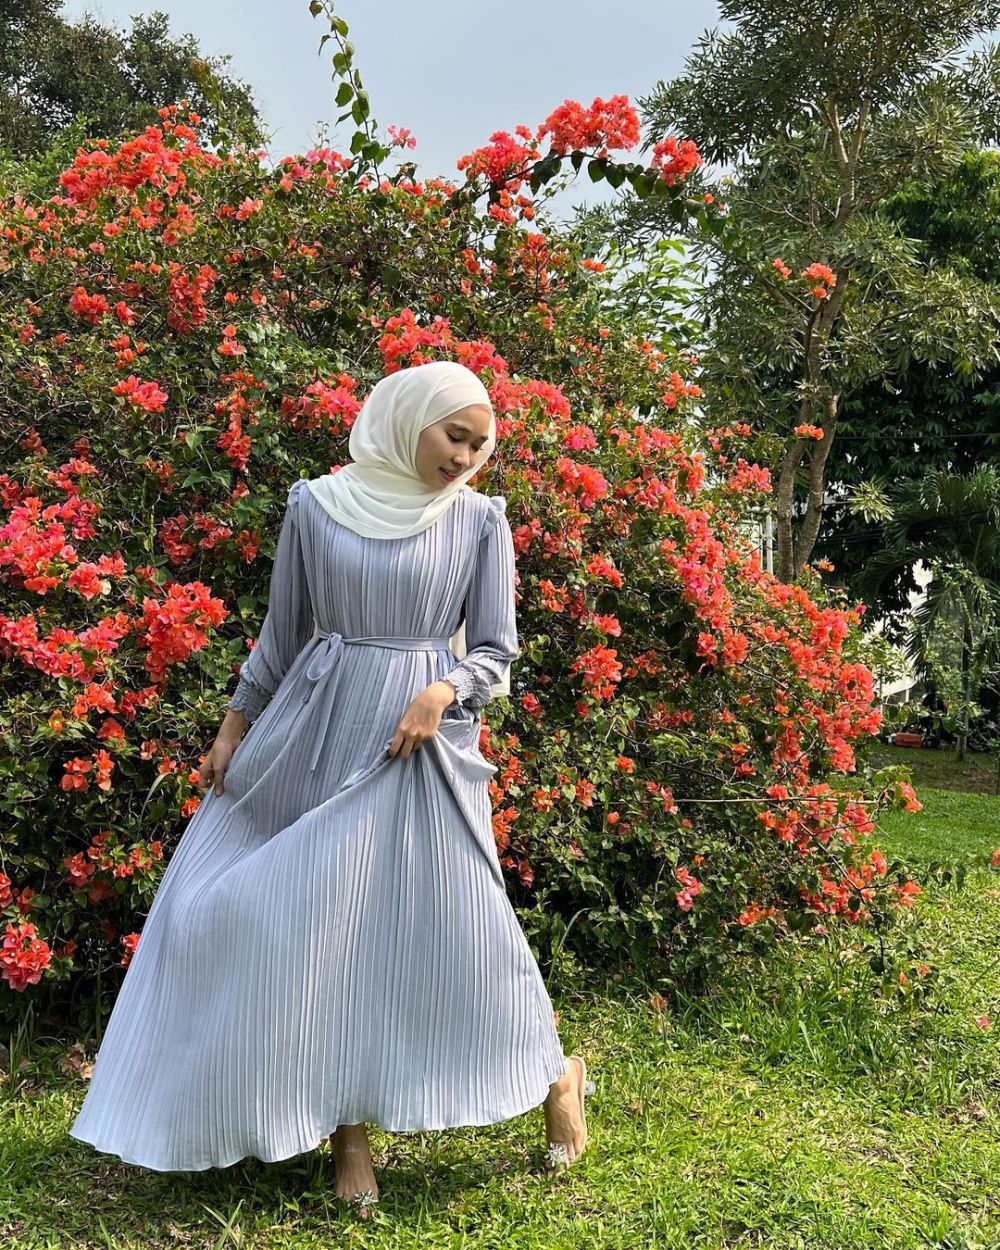 9 Ide Dress Hijab Minimalis ala Astri Ratnasari buat Piknik di Taman